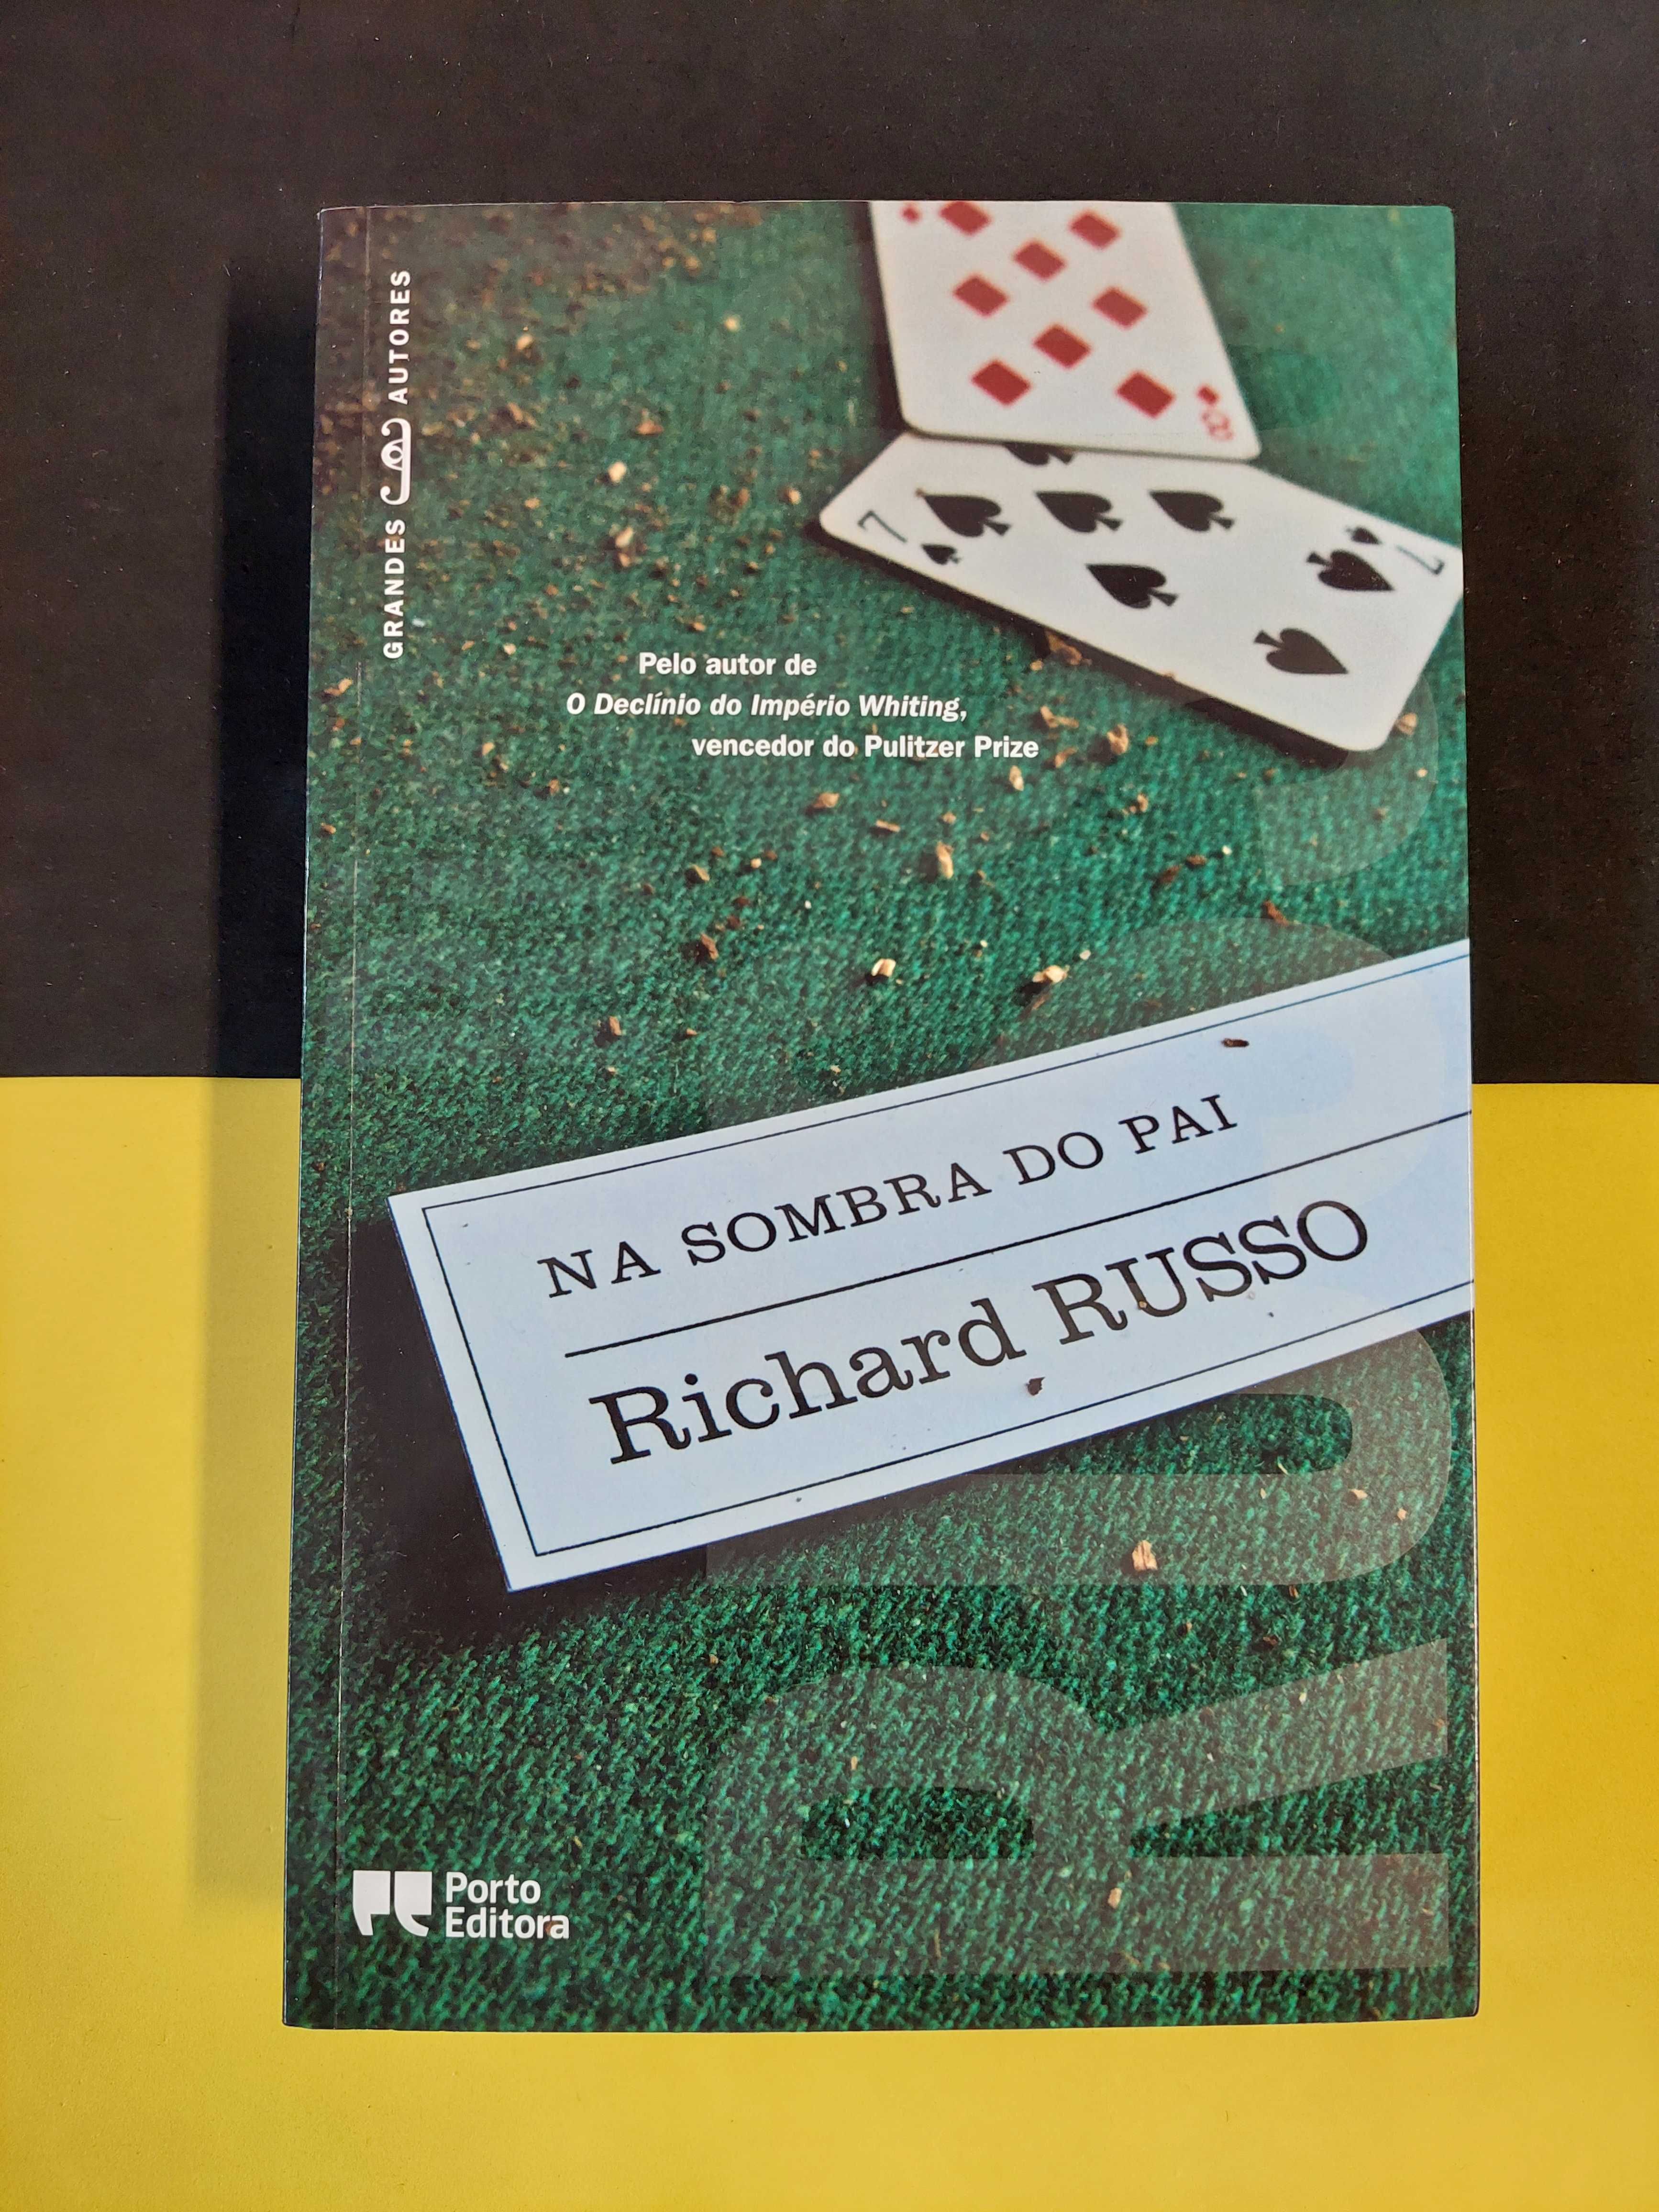 Richard Russo - Na sombra do pai